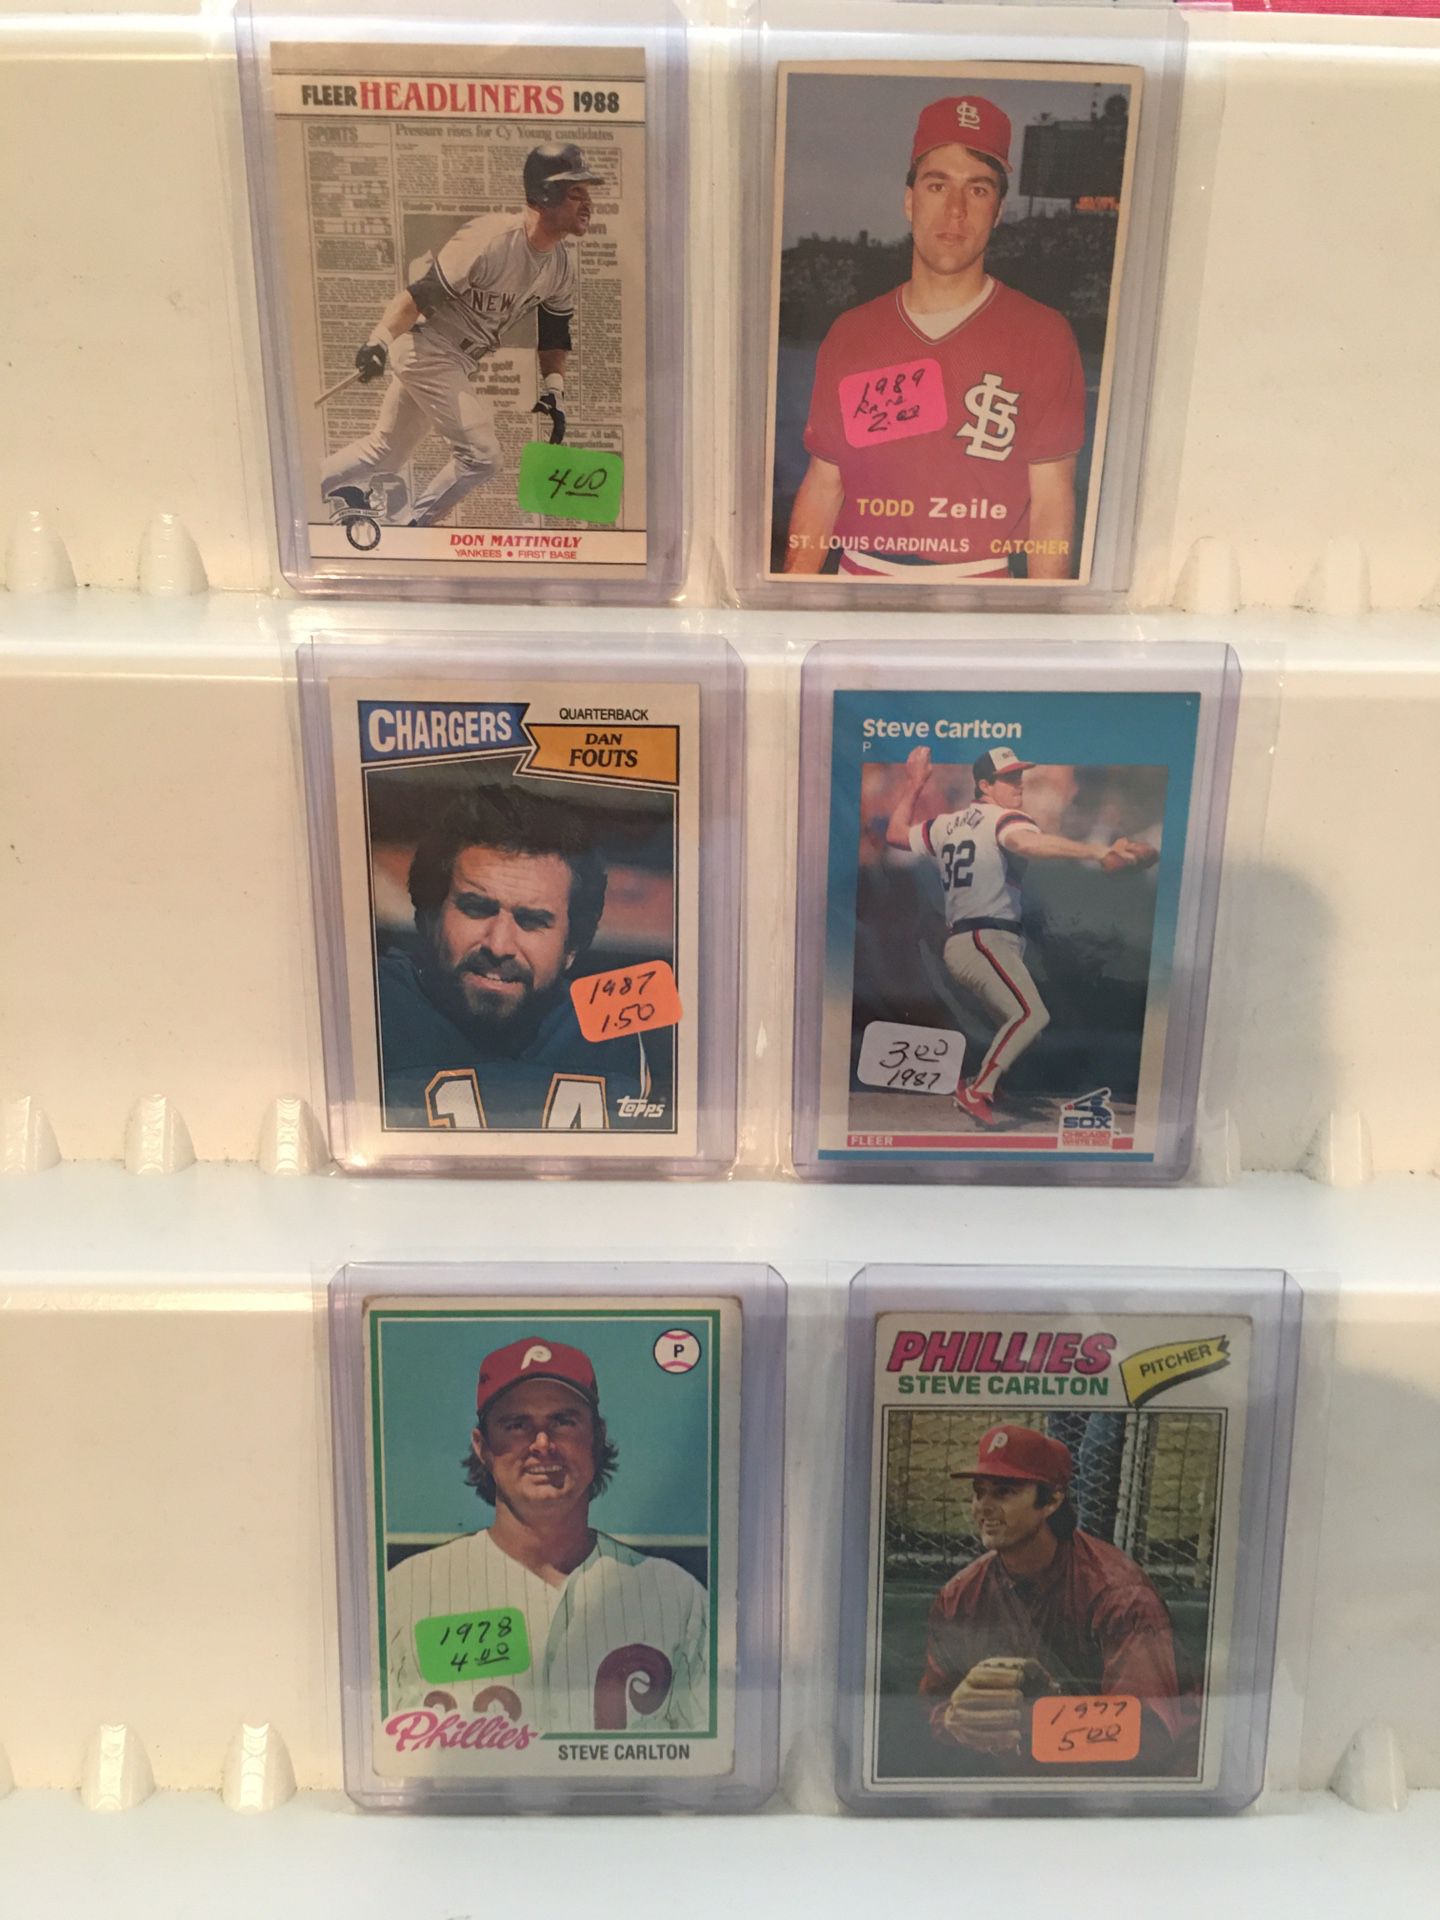 Six old baseball cards